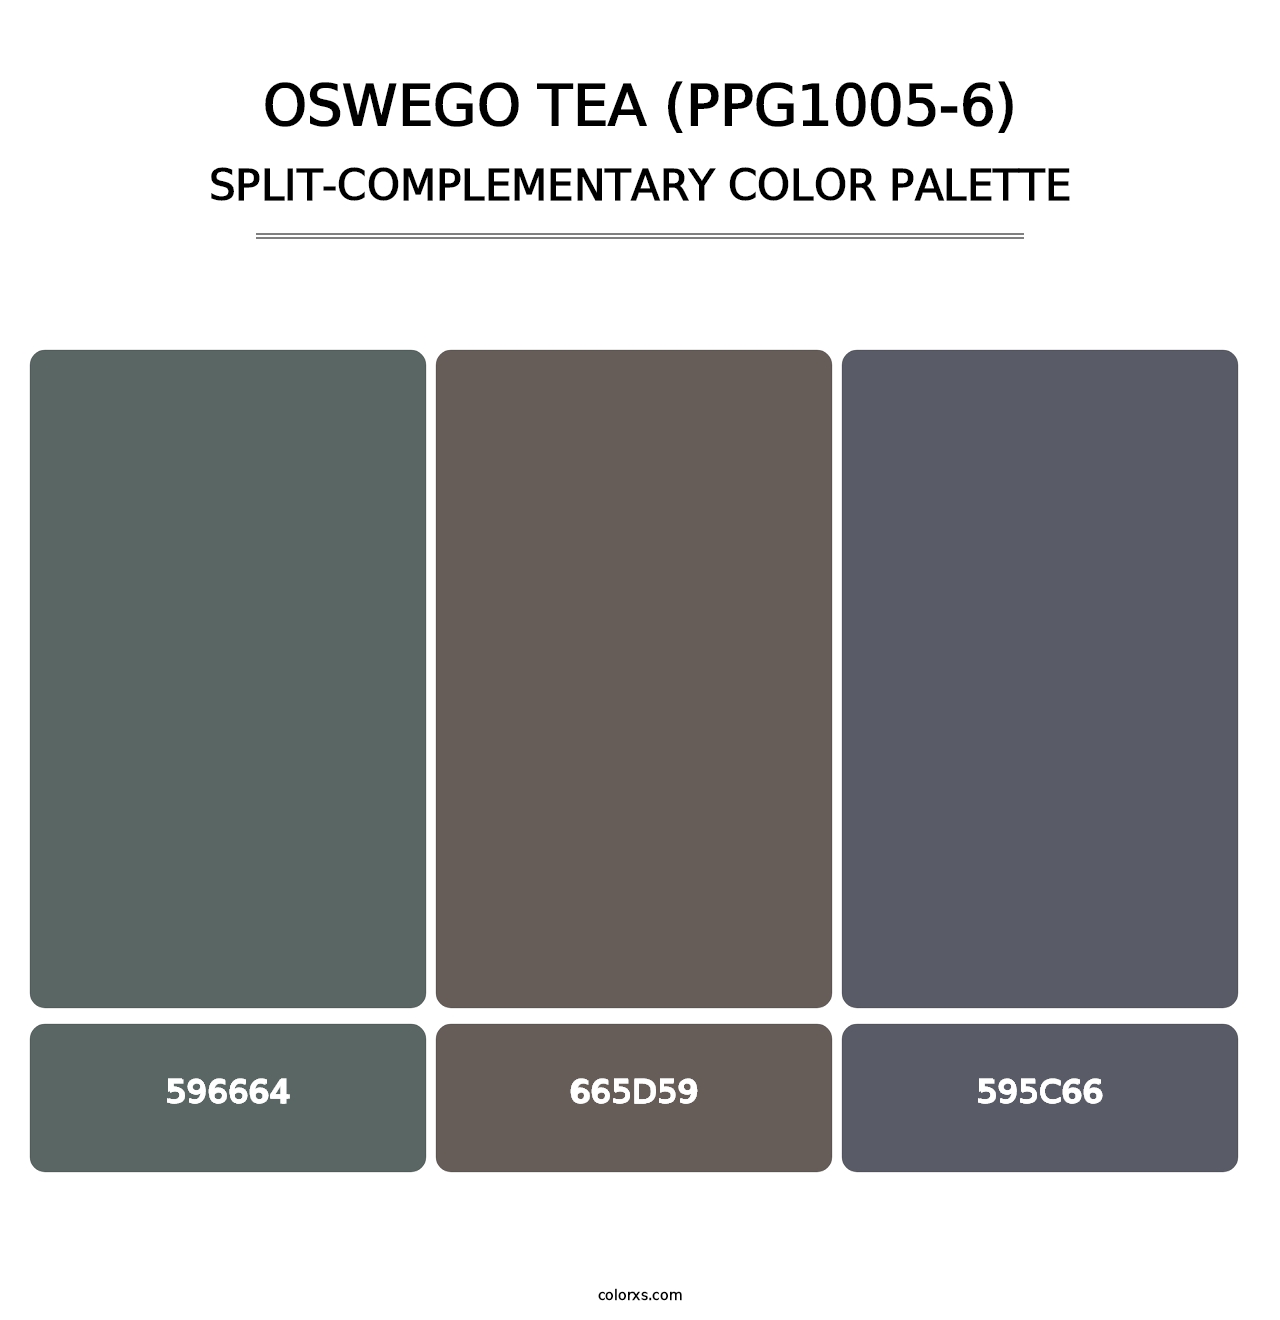 Oswego Tea (PPG1005-6) - Split-Complementary Color Palette